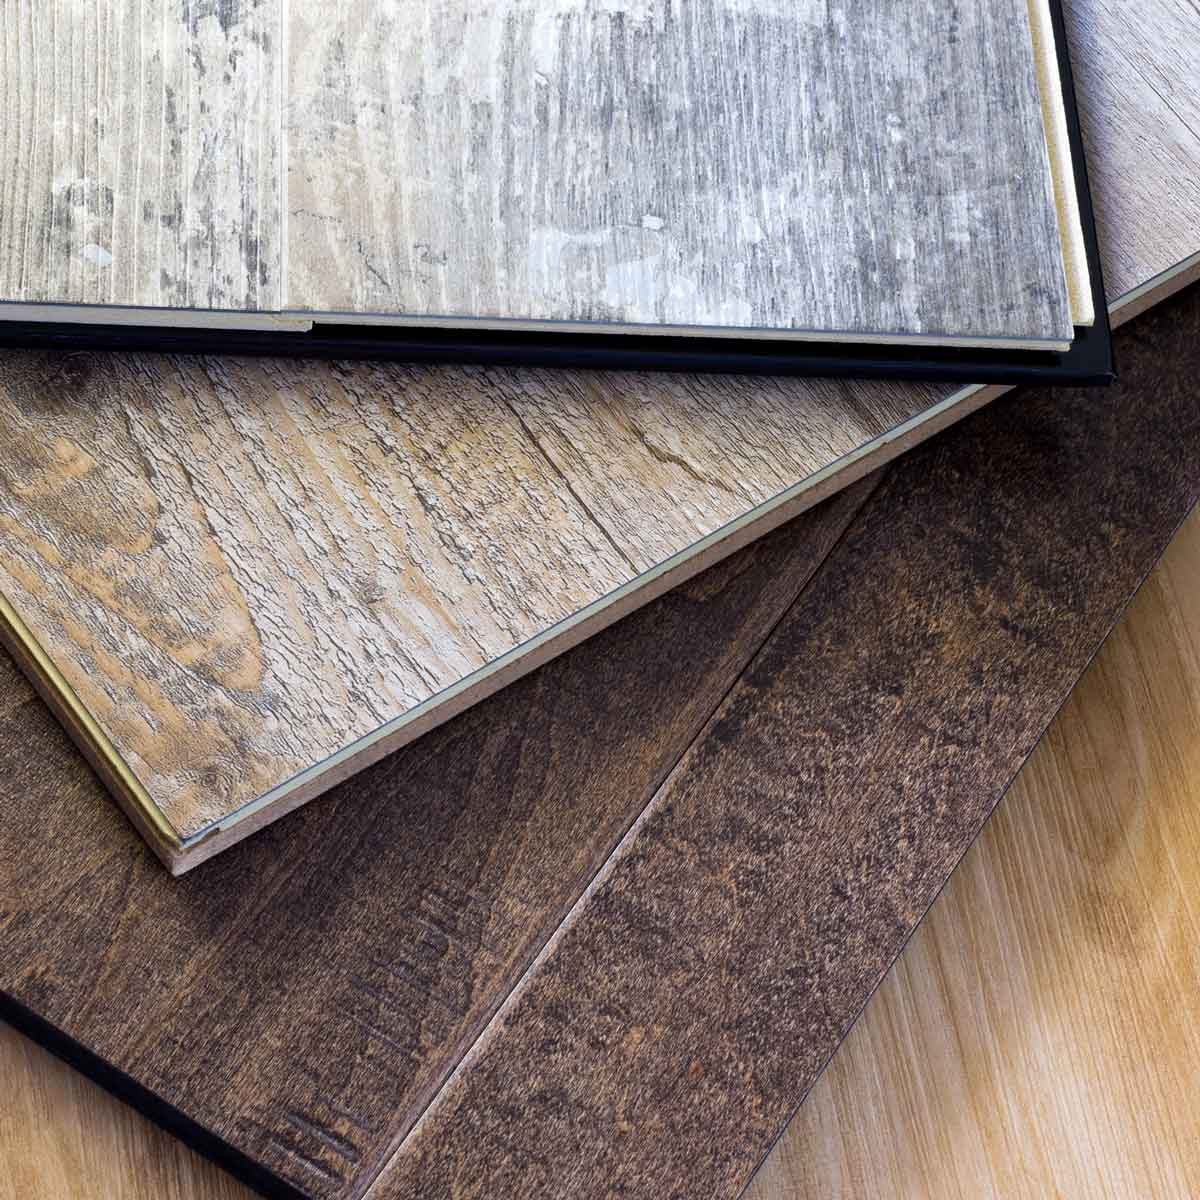 Sheet vinyl linoleum flooring - Handyman Pro